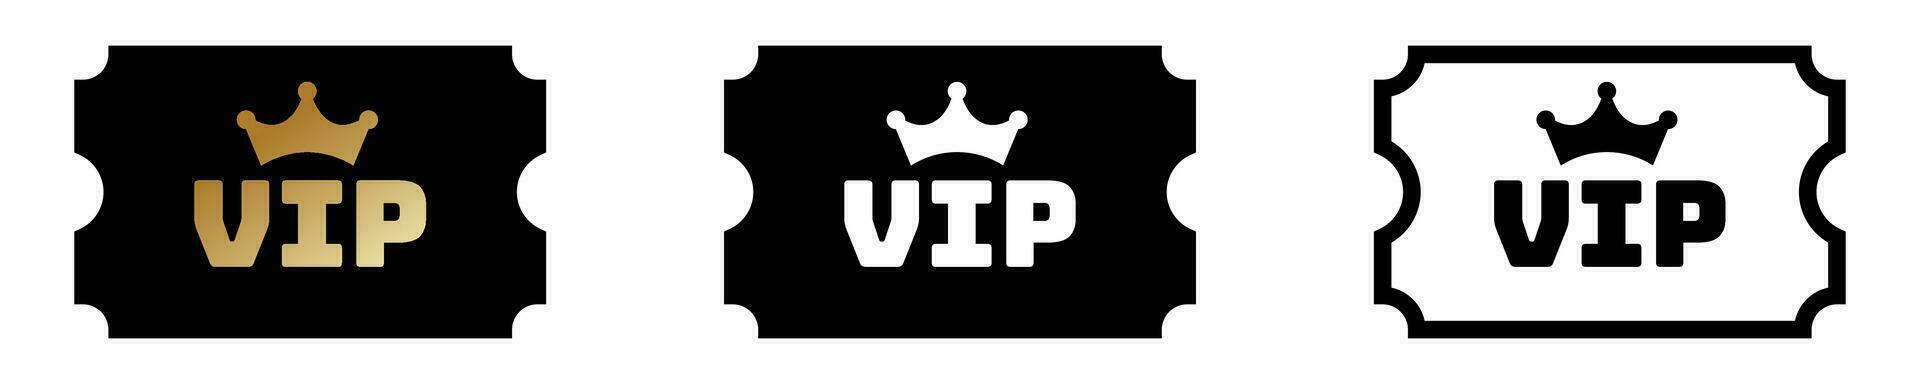 Vip user ticket.  Premium member pass. vector